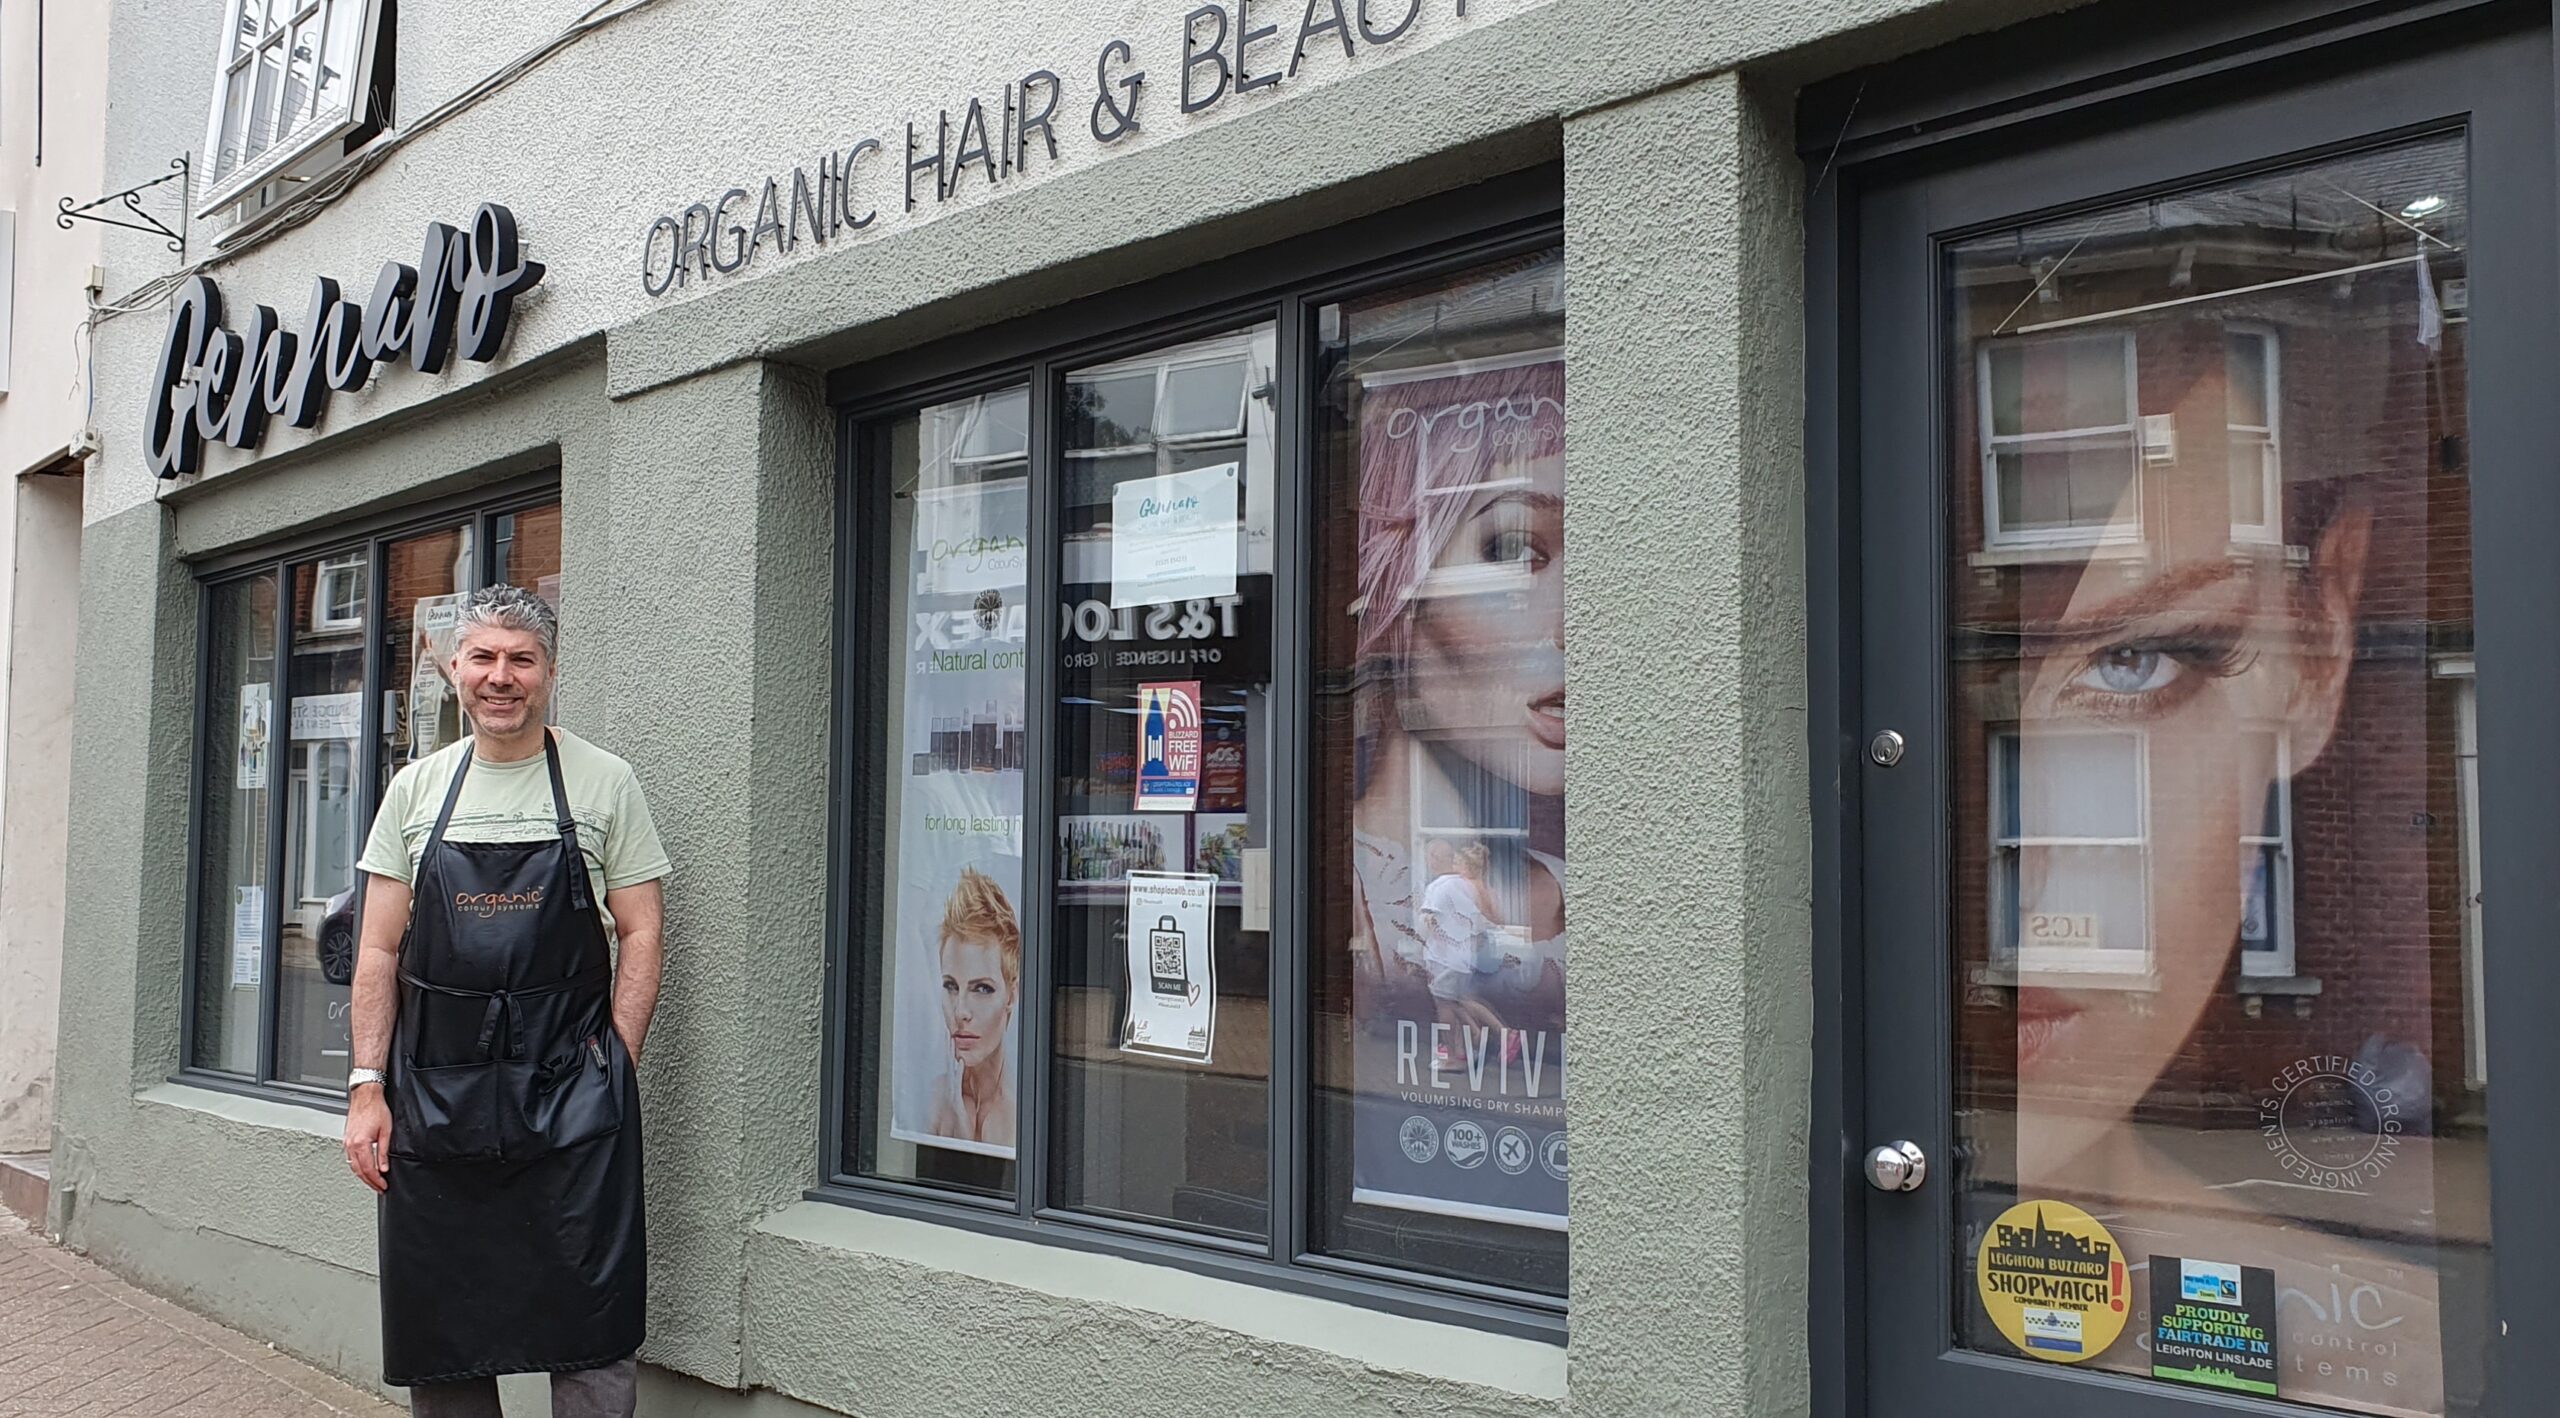 Gennaro Borrelli stood outside his salon, Gennaro Organic Hair & Beauty